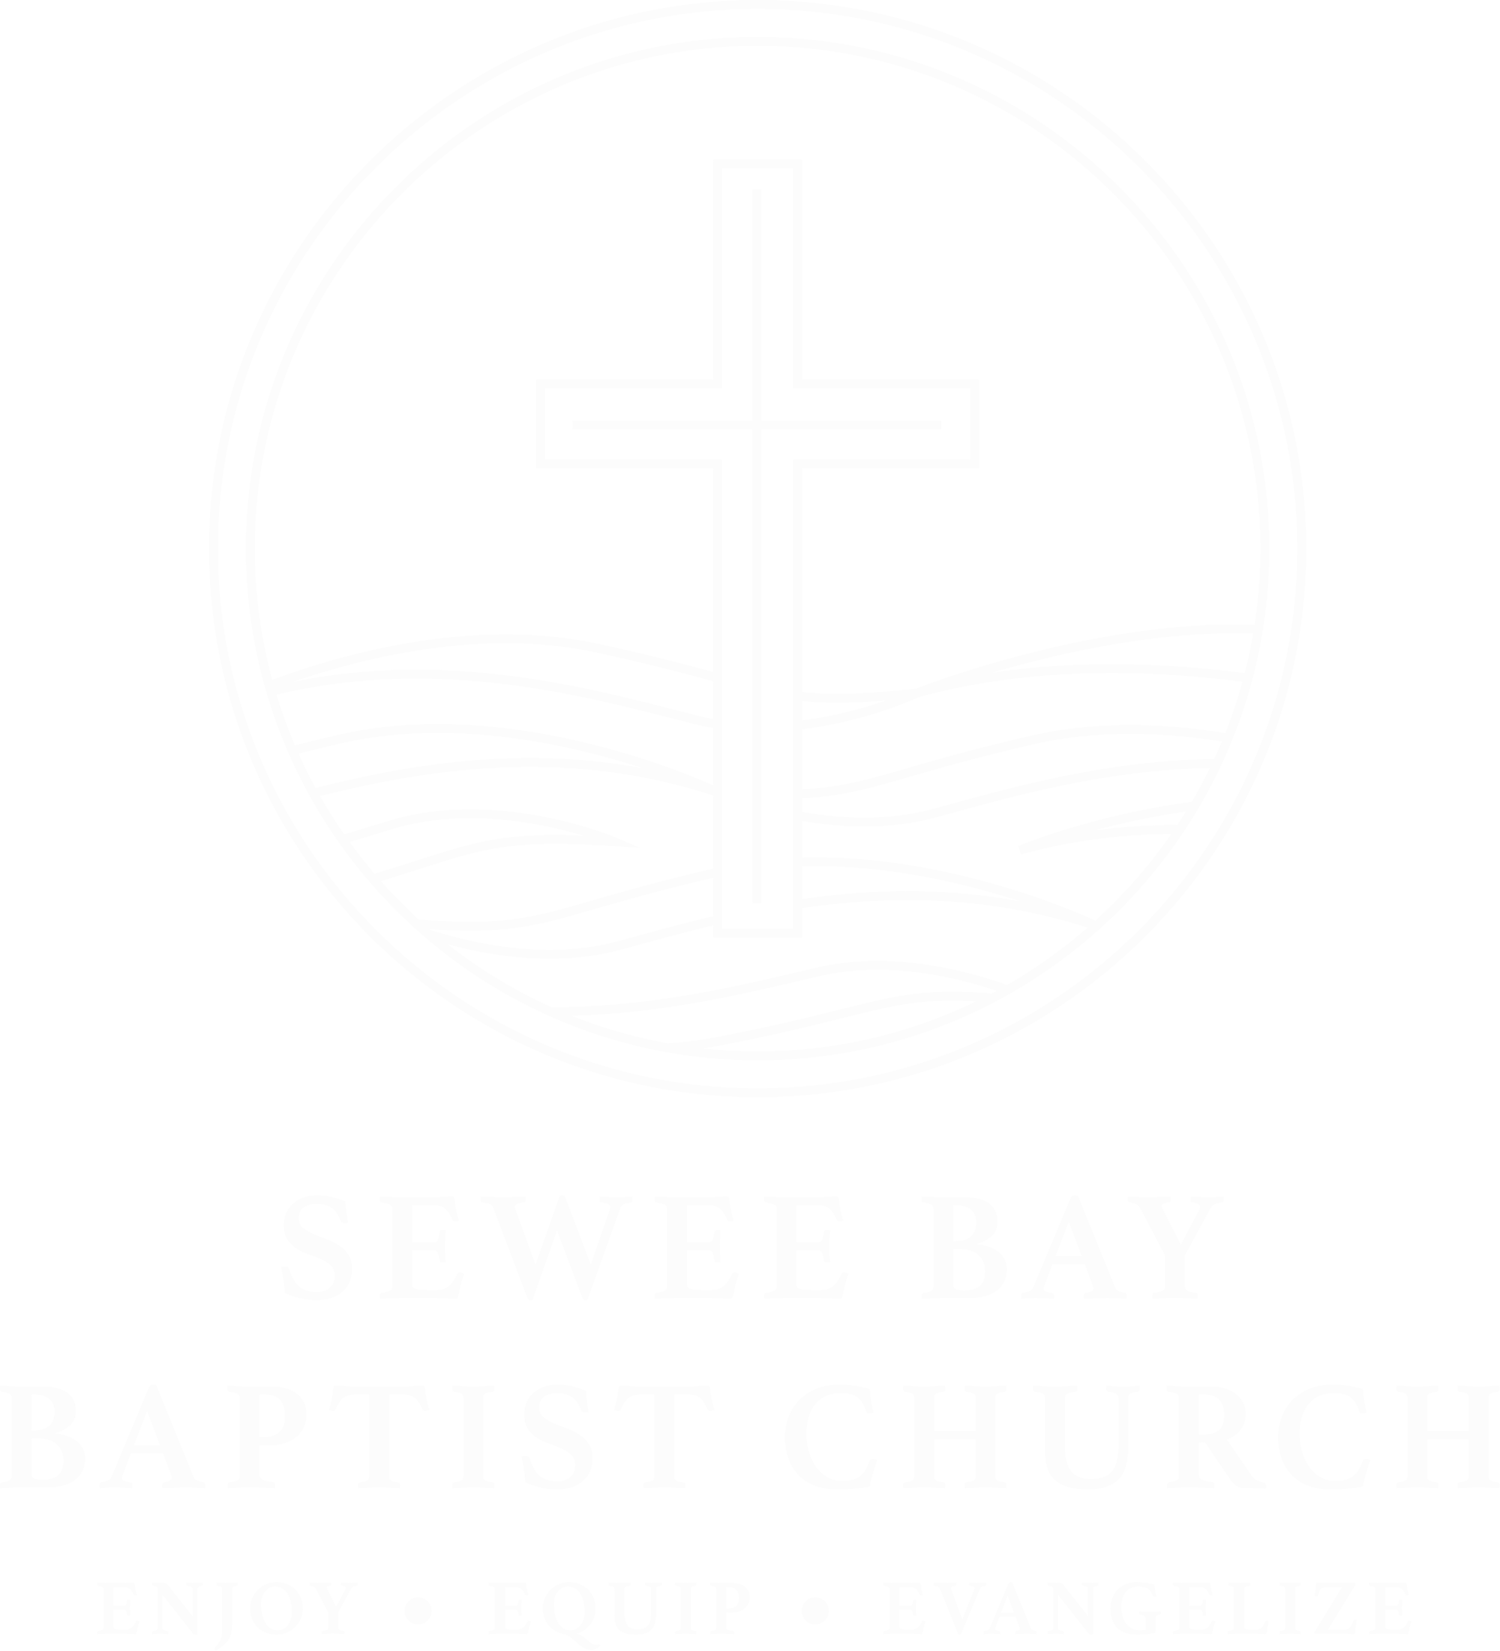 Sewee Bay Baptist Church